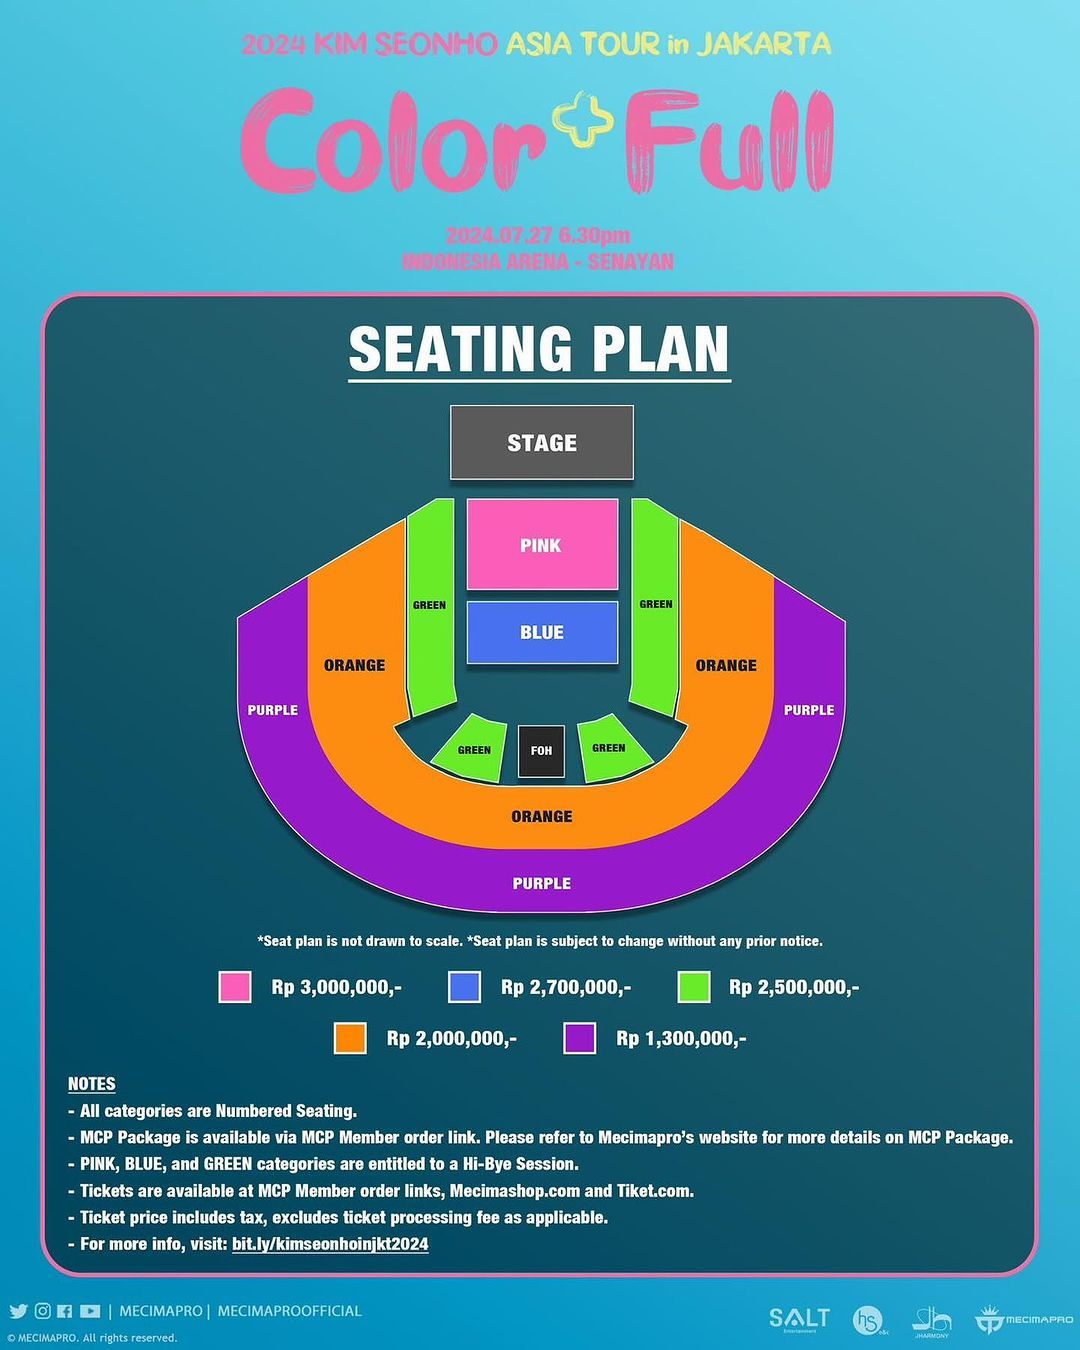 Seat plan fan meeting Kim Seon Ho Color Full di Jakarta.